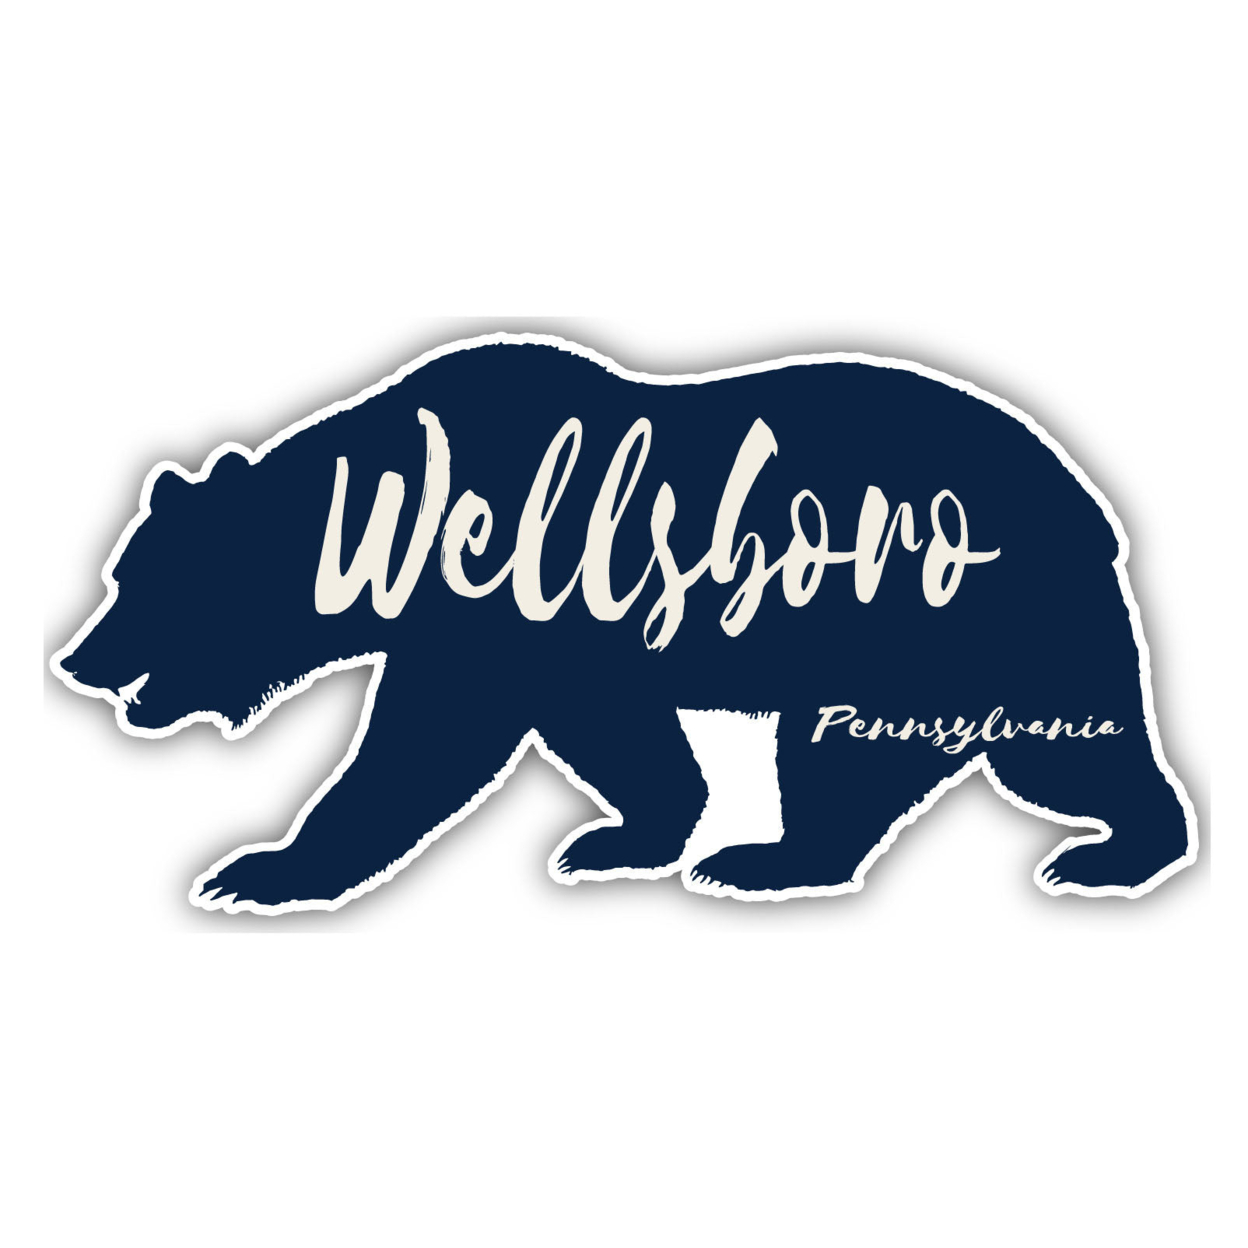 Wellsboro Pennsylvania Souvenir Decorative Stickers (Choose Theme And Size) - Single Unit, 4-Inch, Bear